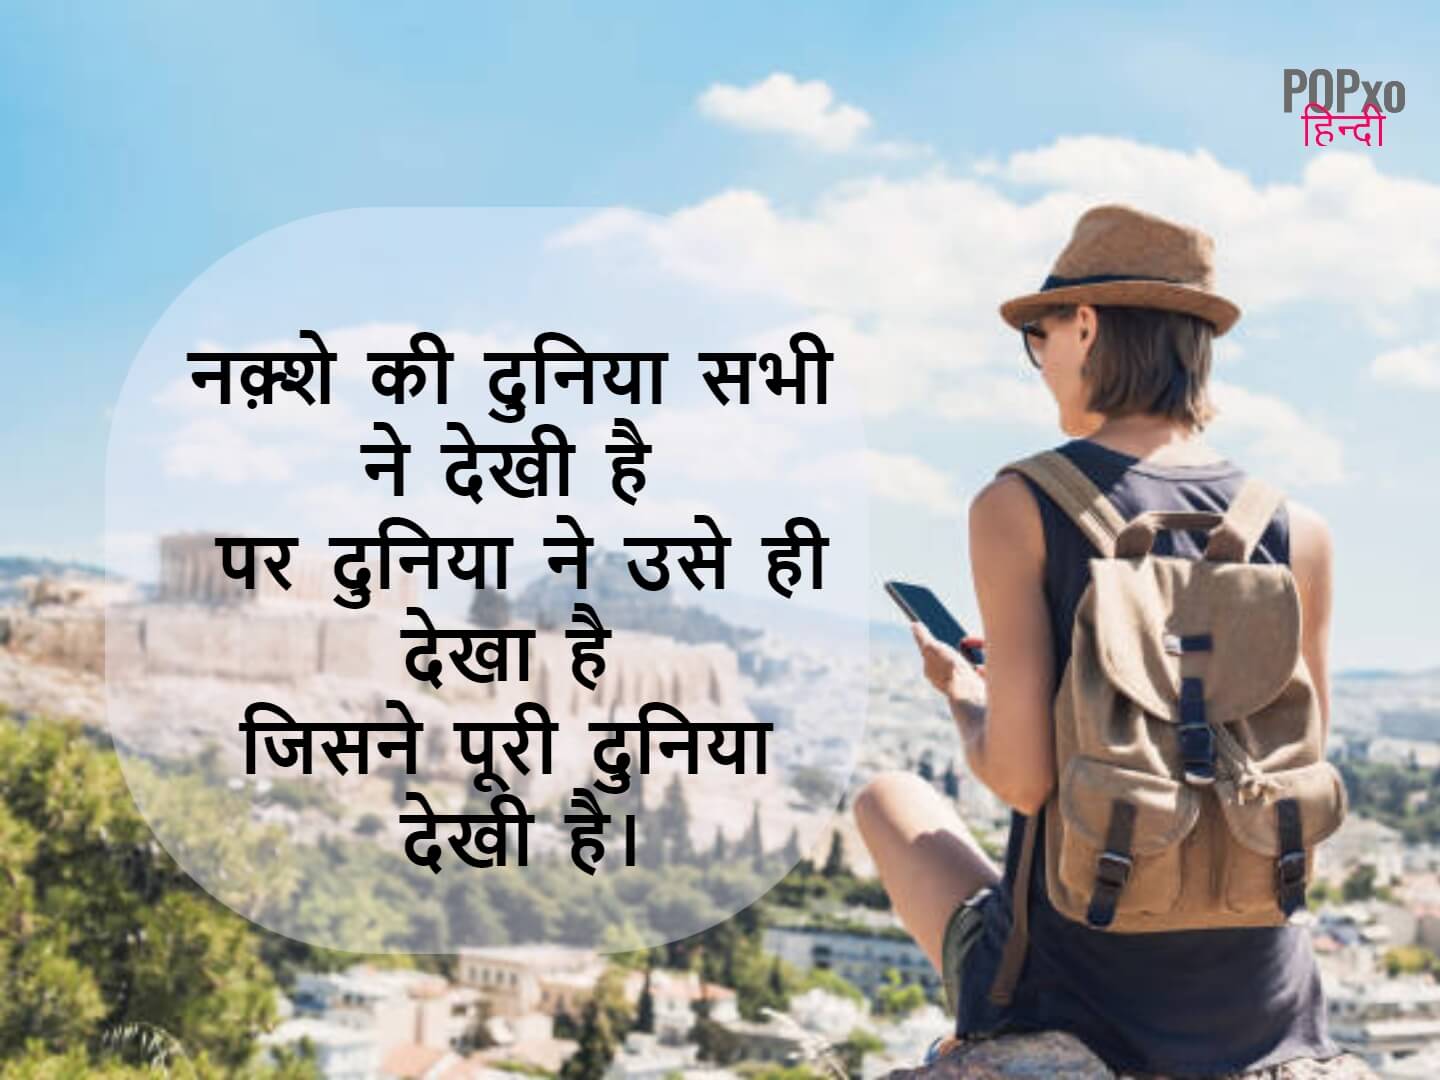 यात्रा पर सुविचार - Travel Thoughts in Hindi